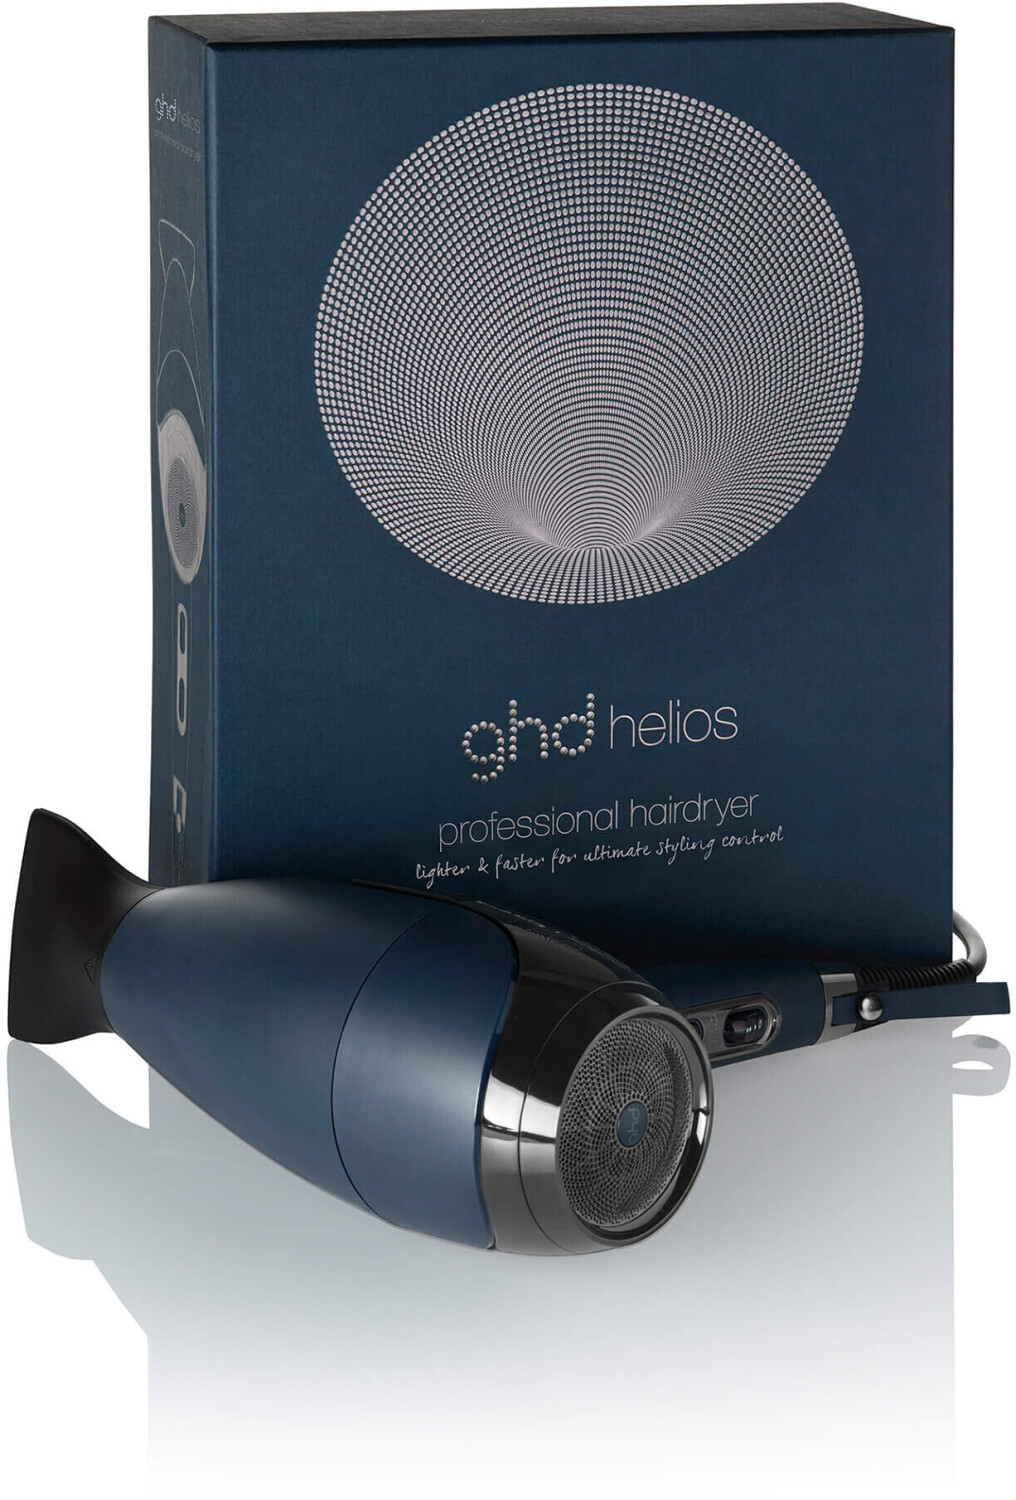 Secador Ghd Helios - Perfumes Club